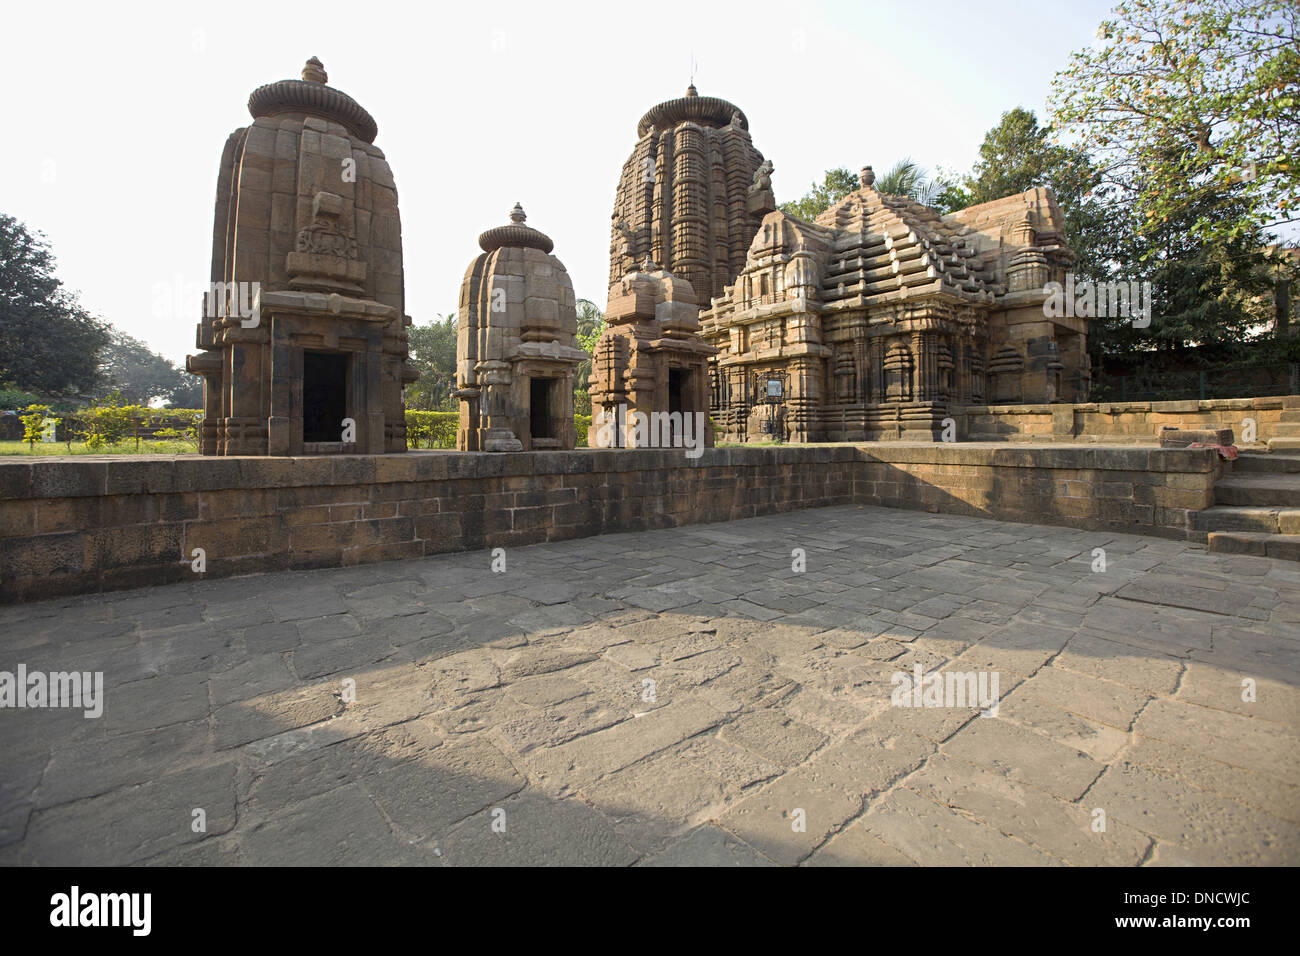 Templo Muktesvara - Vista general del templo de Mukteshwar. Bhubaneshwar, Orissa, India. Foto de stock